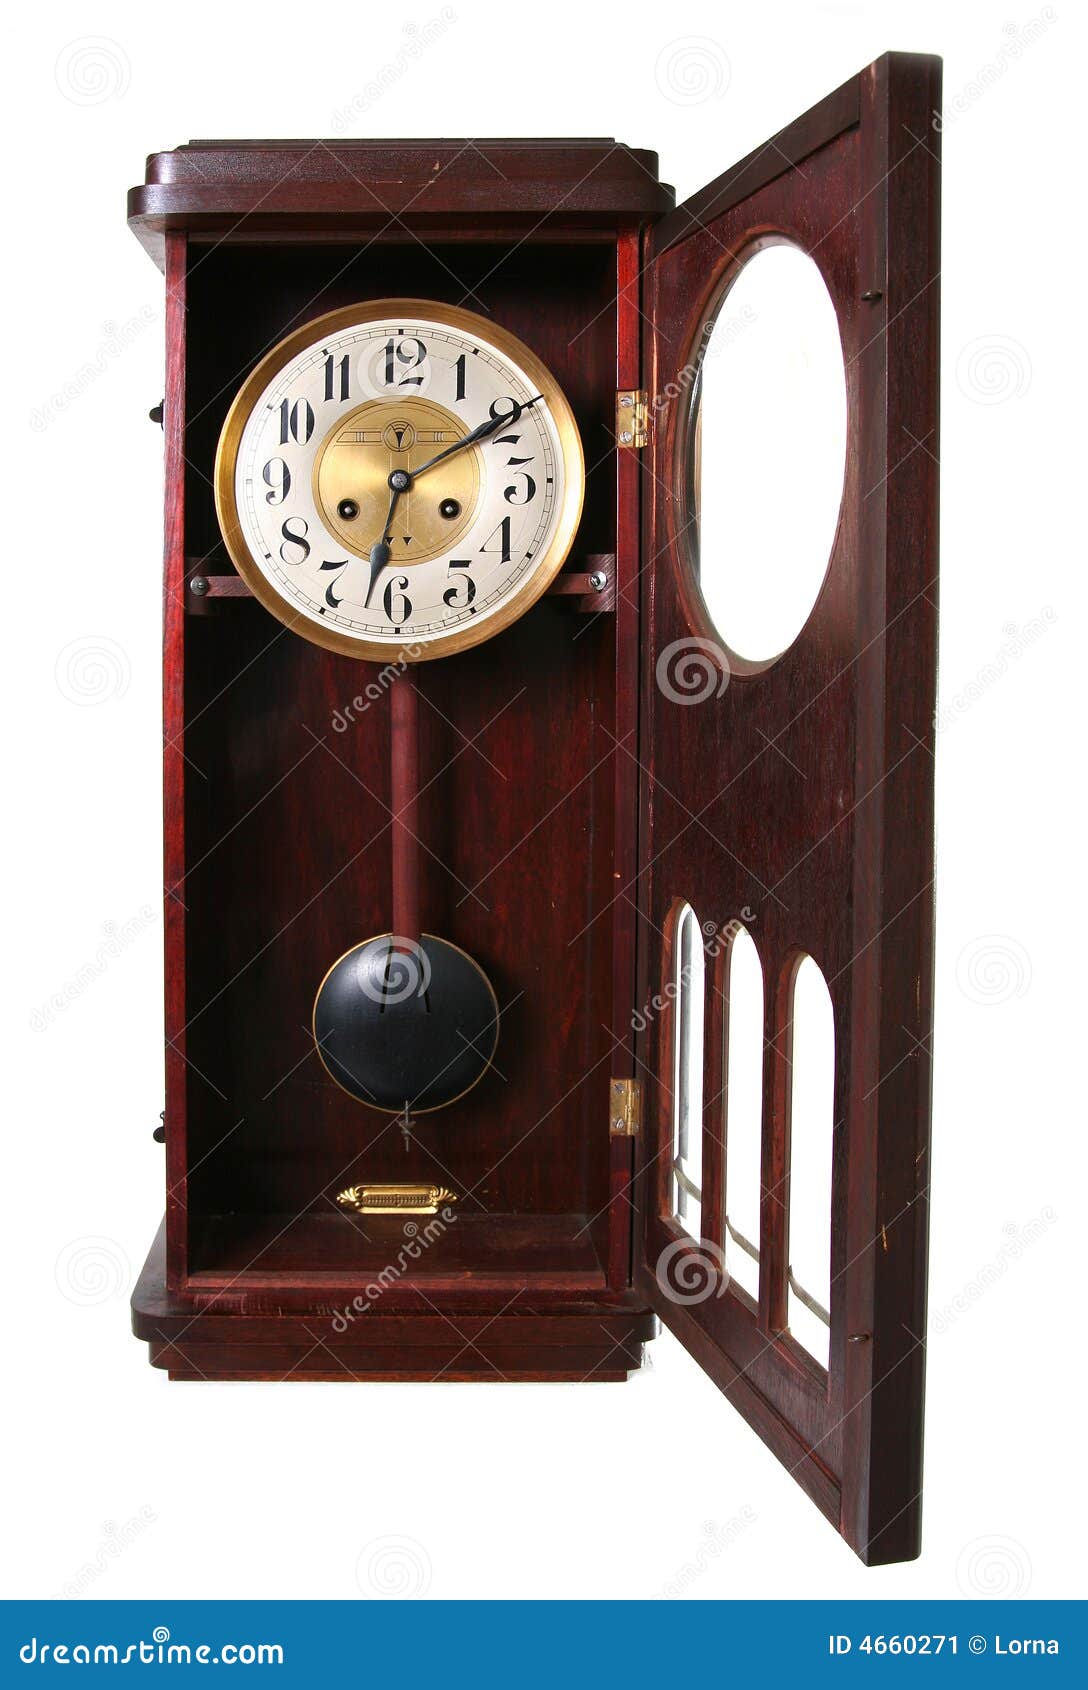 Antique Clock pendulum image Solid Brass Decorative Banner Design Graphics Website Background Instant Digital Download One Photo only!